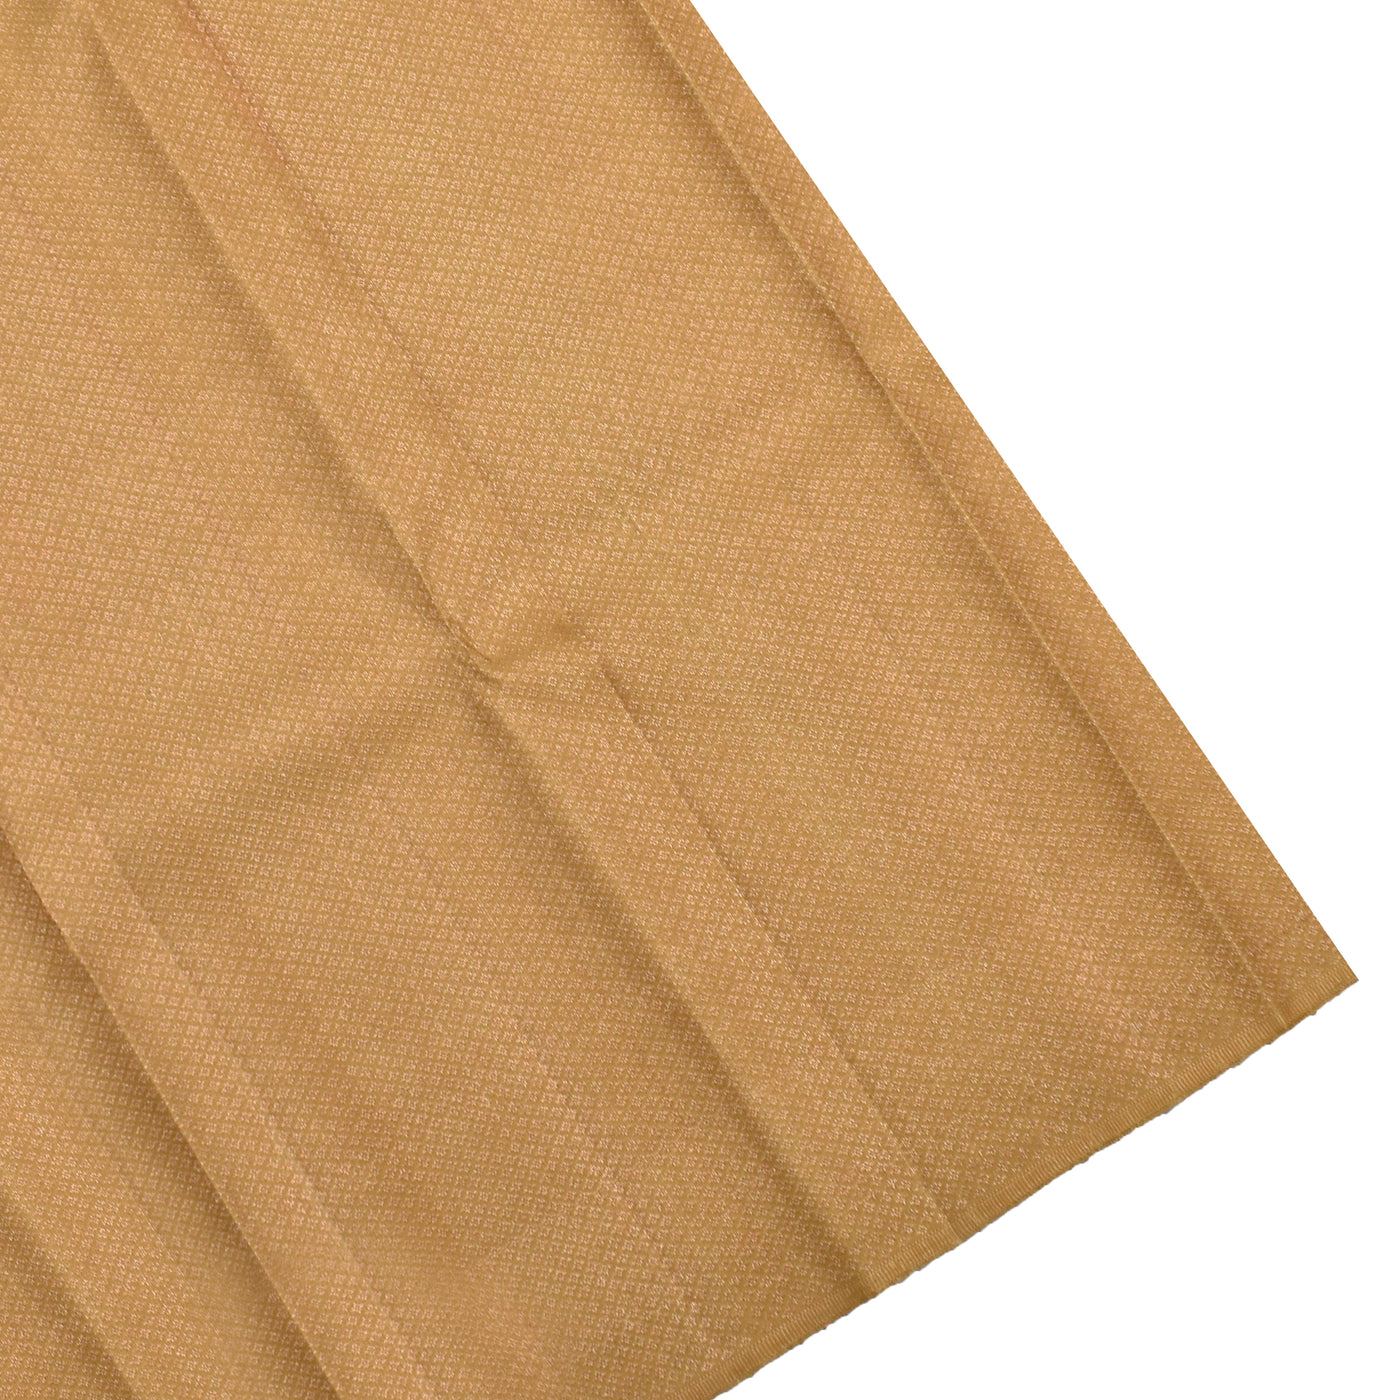 Golden Kanchipuram Silk Saree with Star Butta Stripes Design